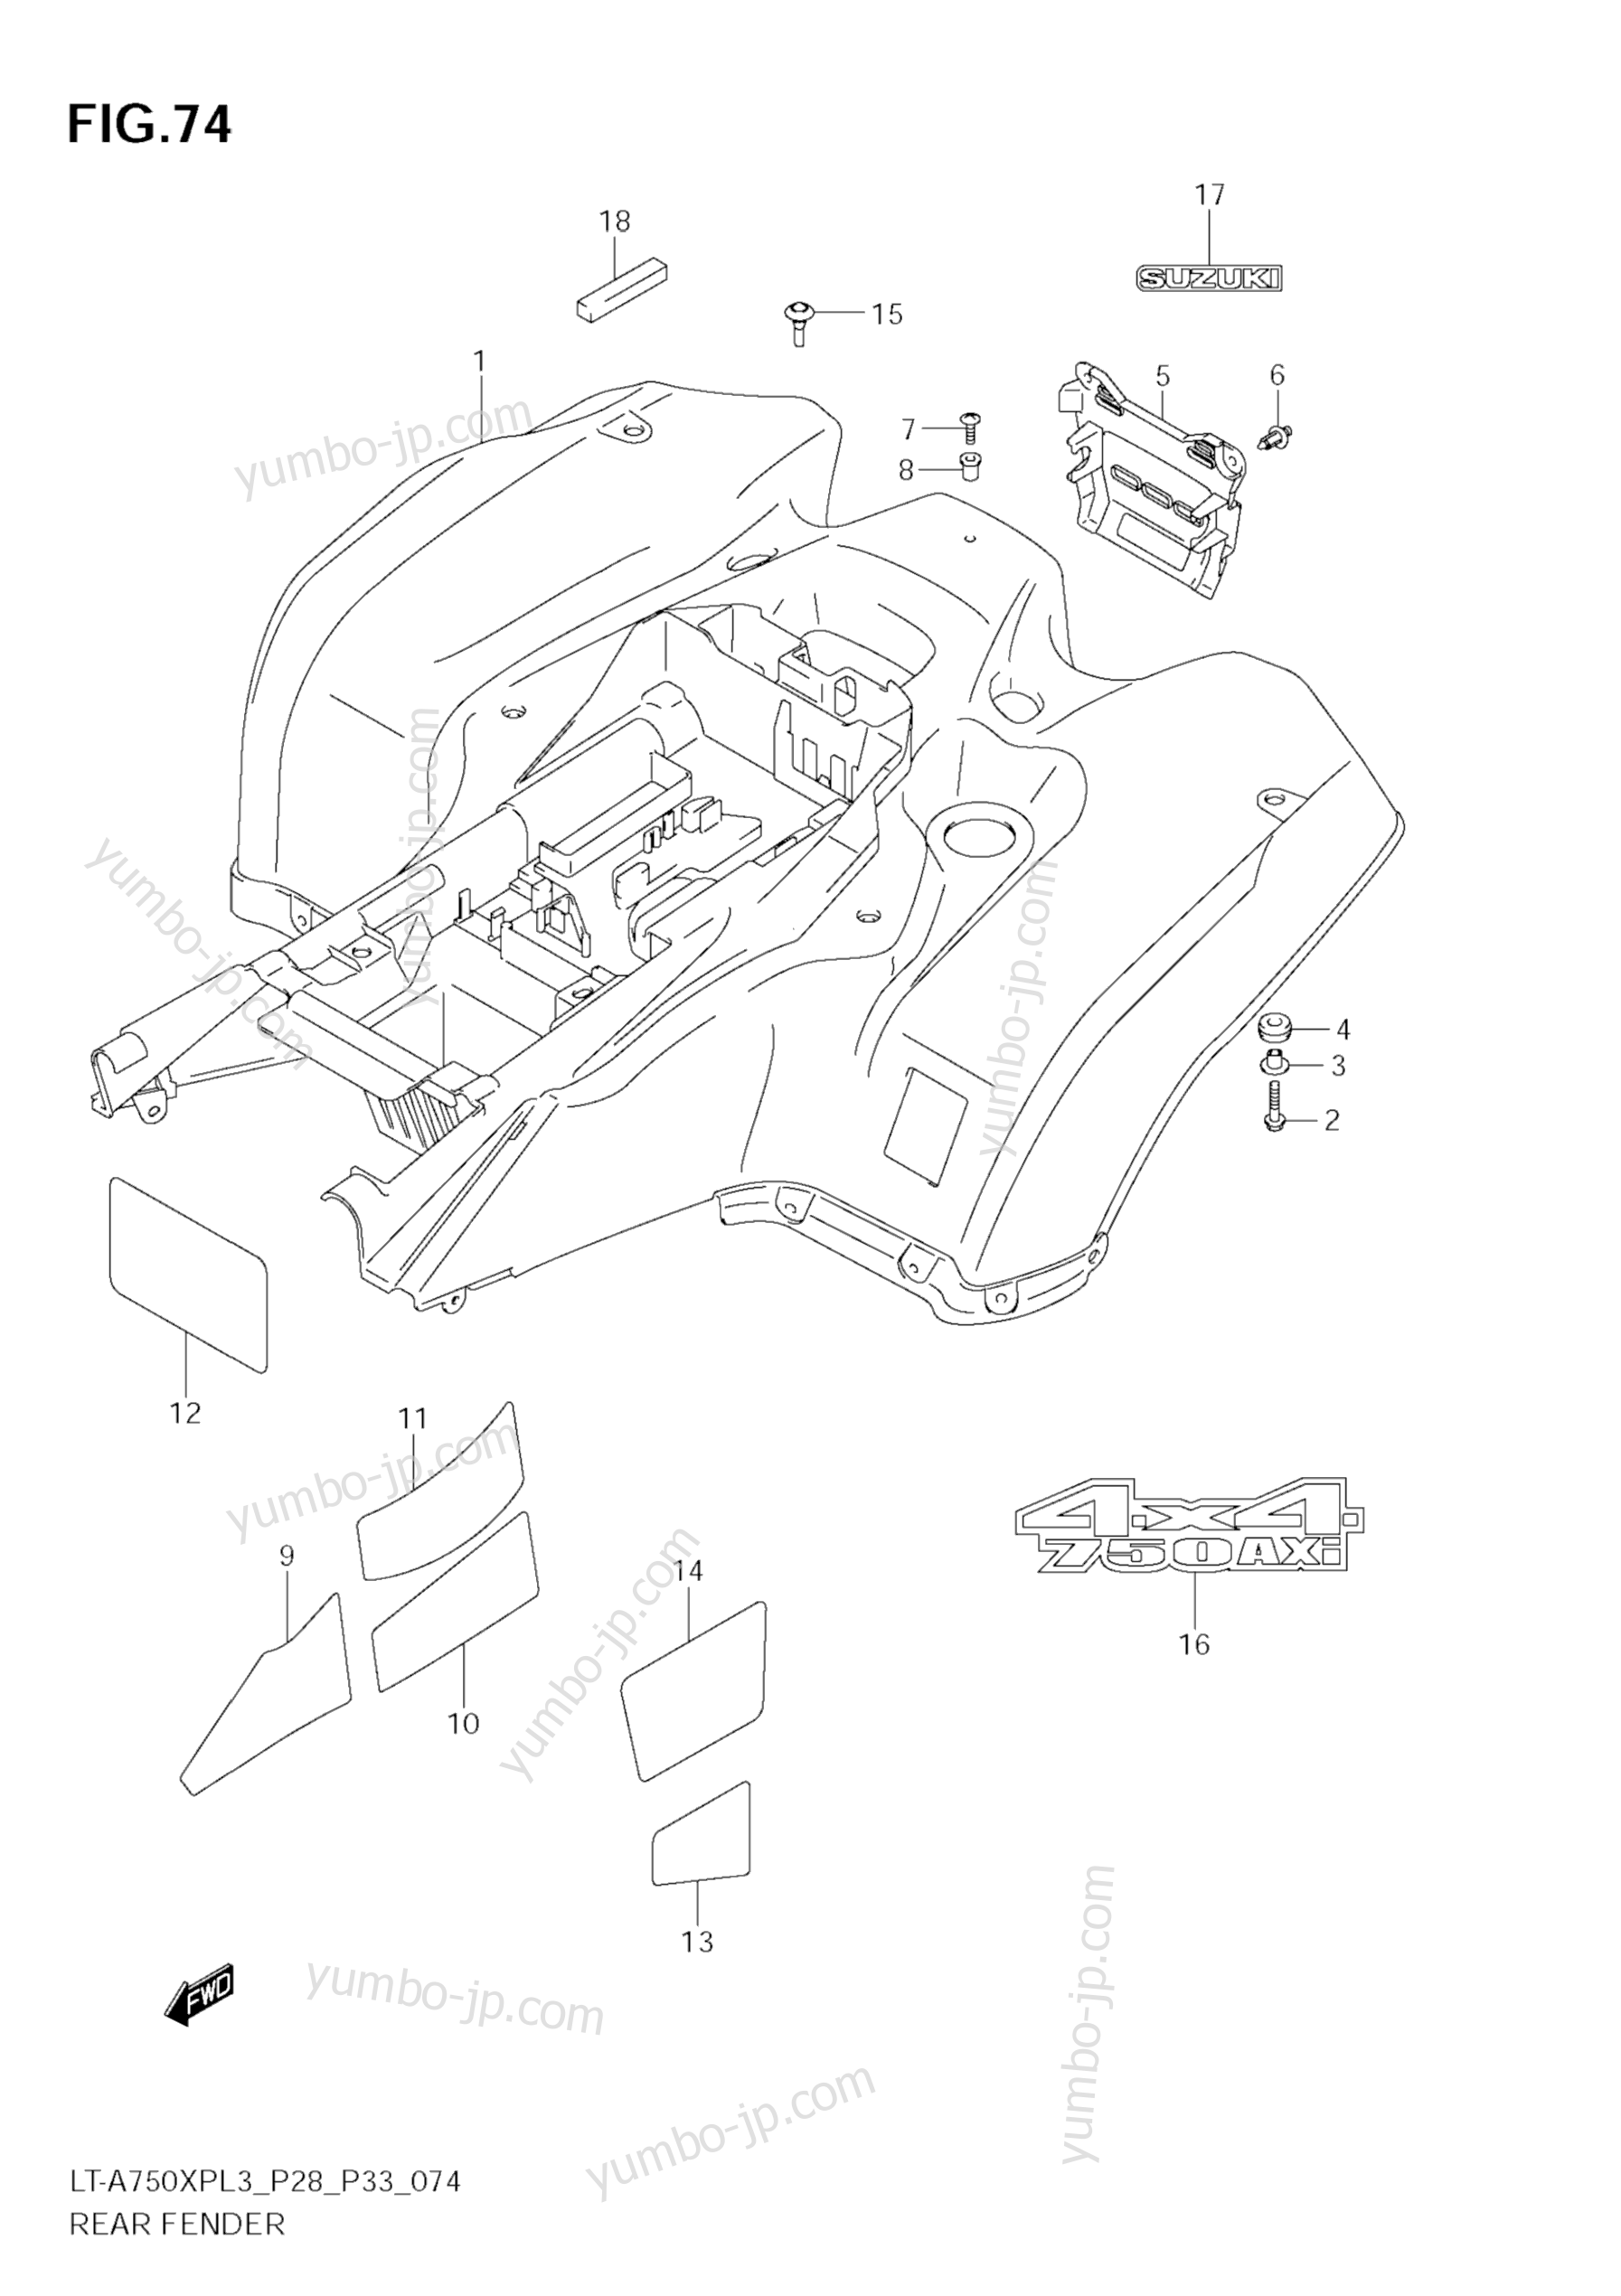 REAR FENDER (LT-A750XPL3 E28) for ATVs SUZUKI KingQuad (LT-A750XP) 2013 year